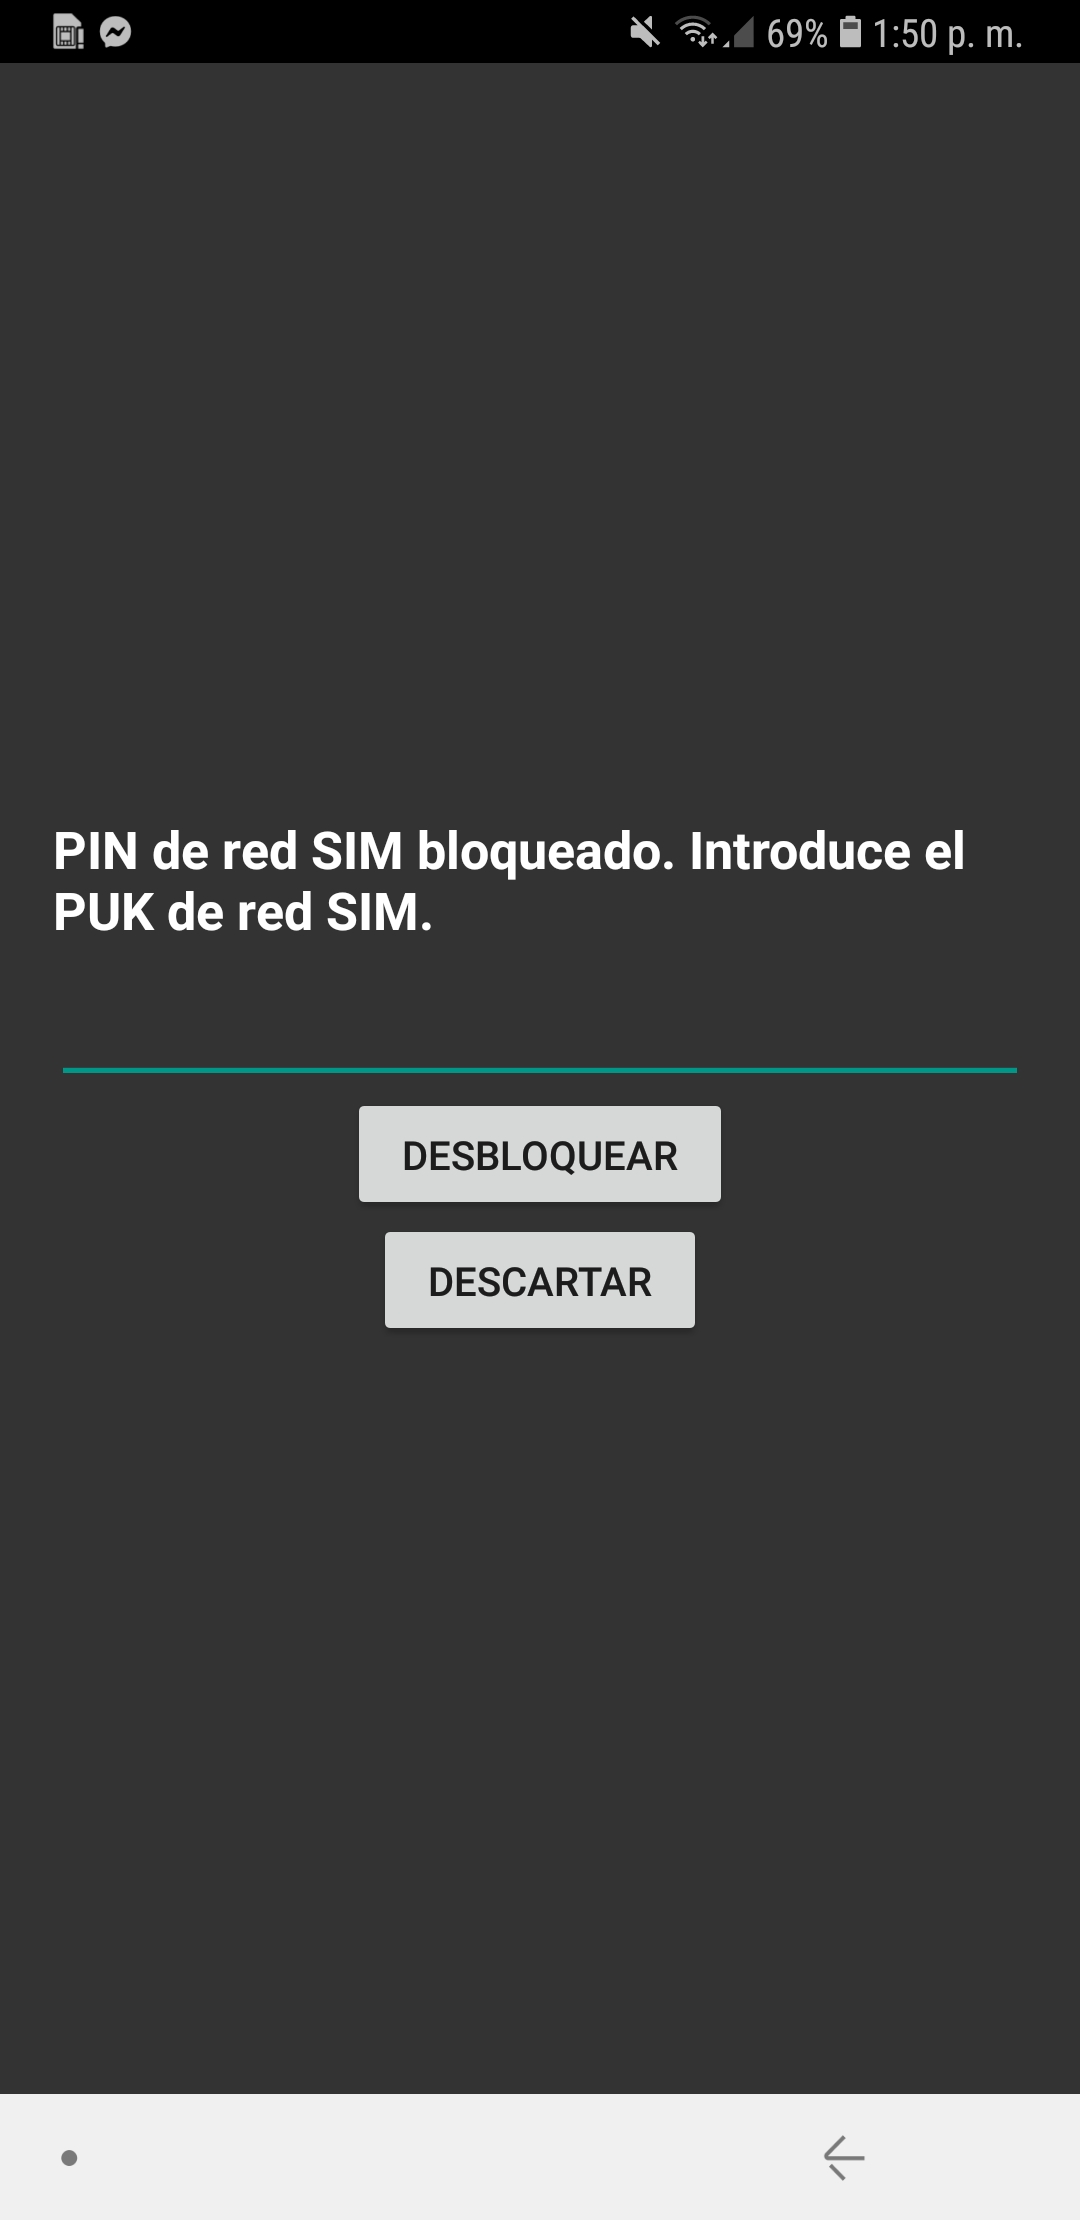 [Regional Lock] - Tarjeta Sim bloqueada por insertada - Página 8 - Samsung Community